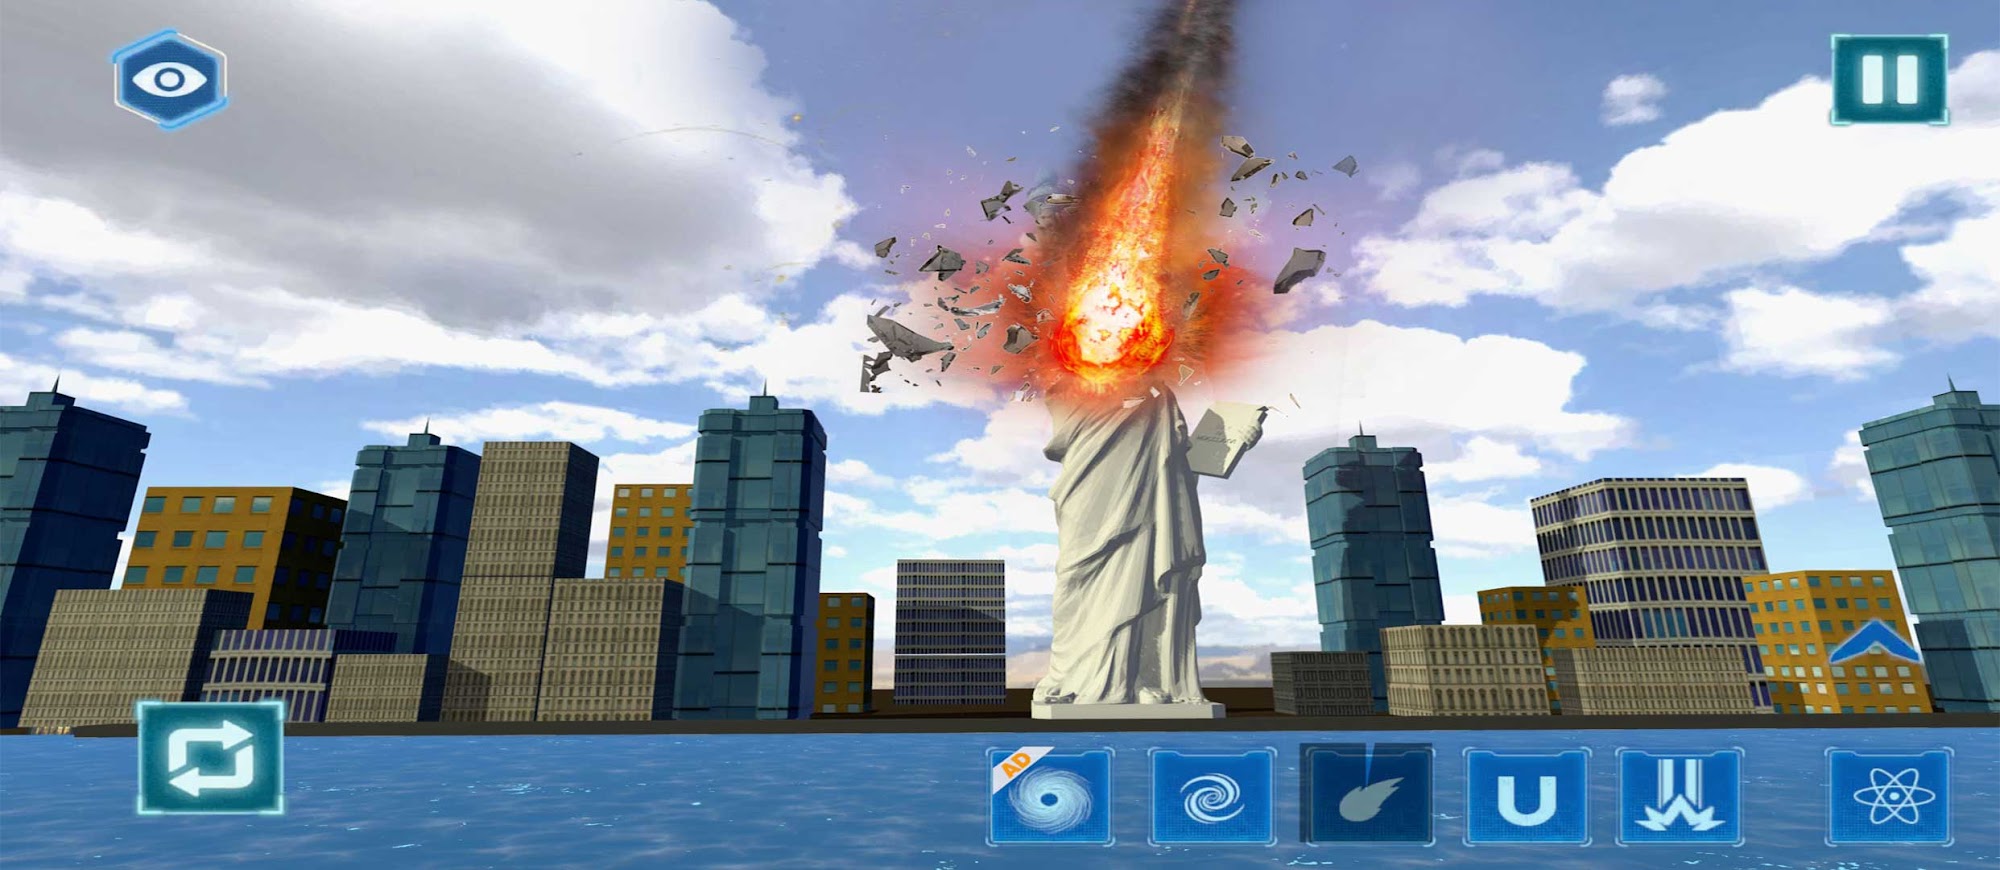 Descargar City Smash: Destroy the City gratis para Android.